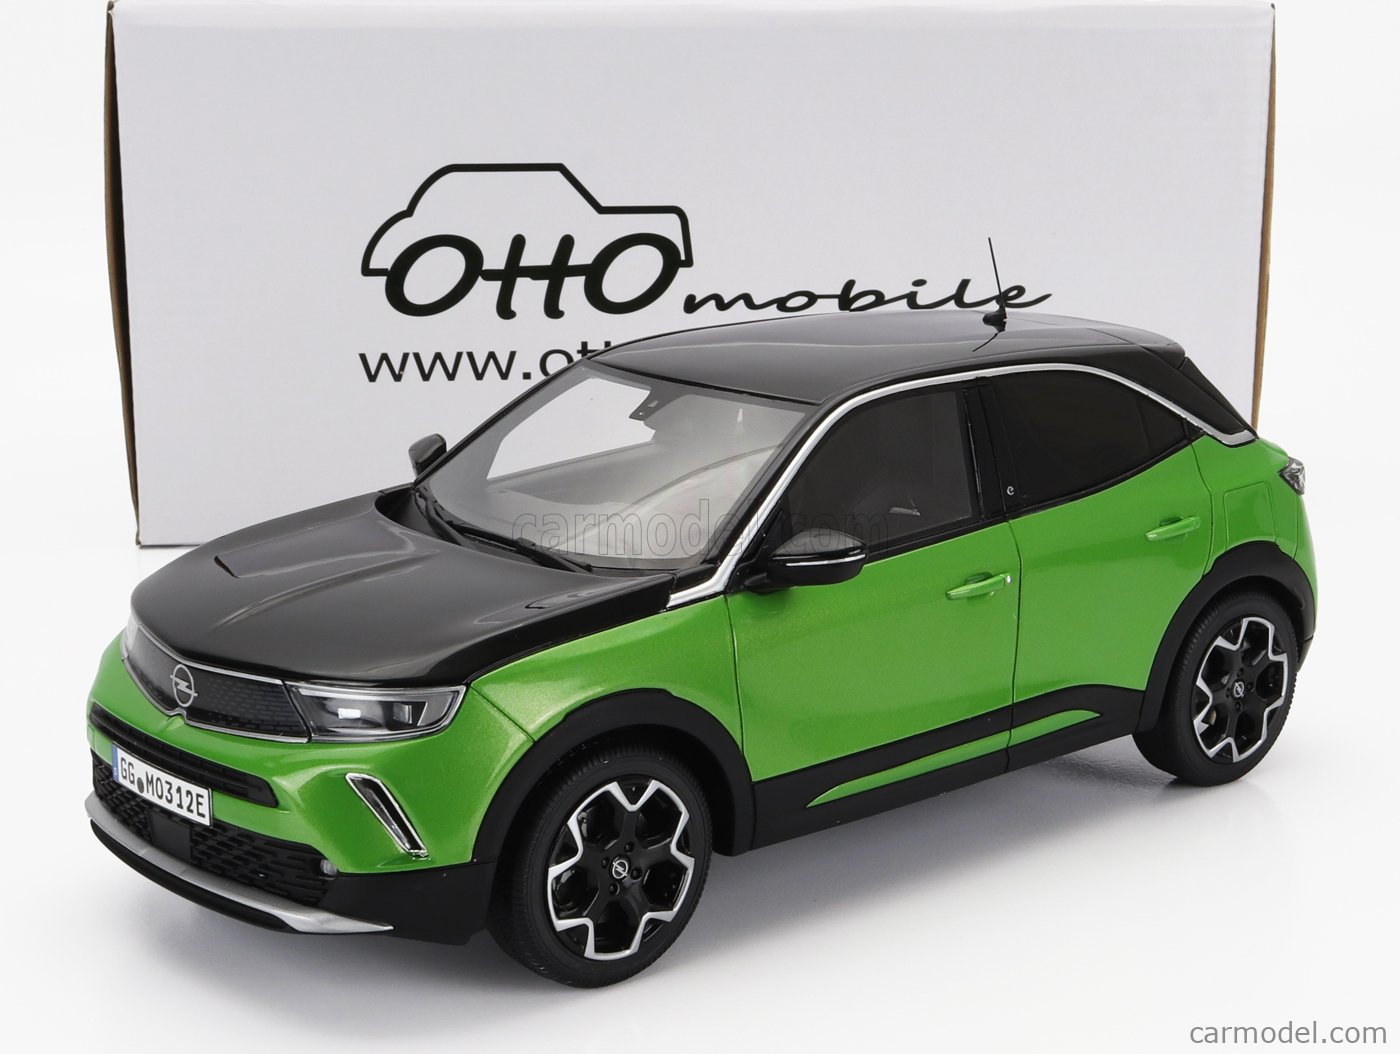 1/18 : L'Opel Mokka-E annoncé chez OttOmobile - PDLV